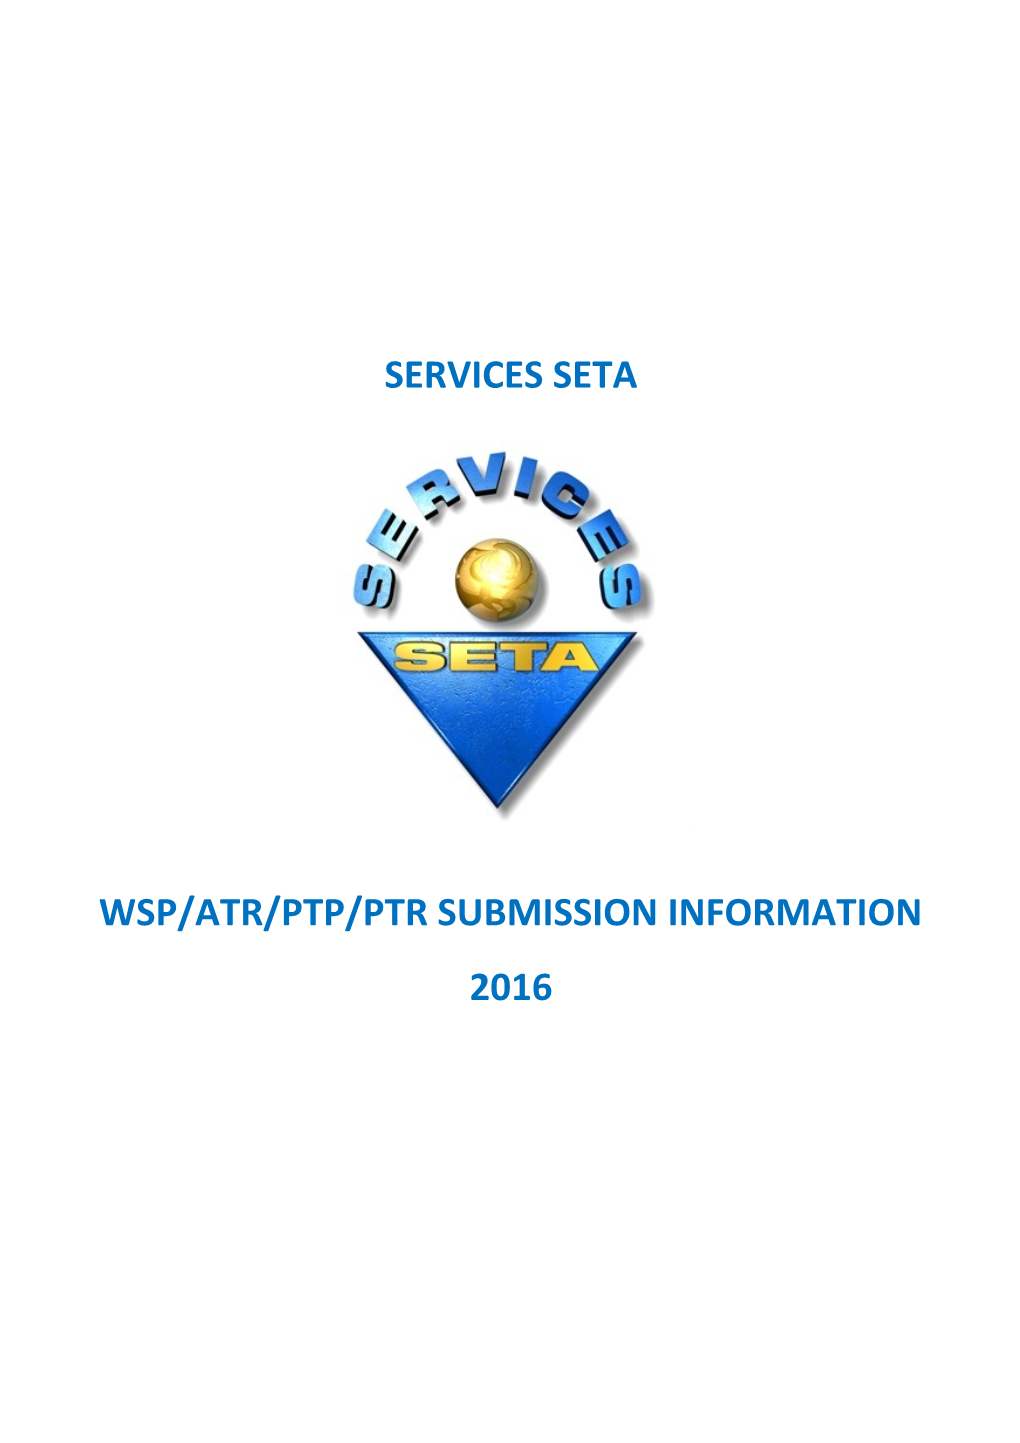 Wsp/Atr/Ptp/Ptr Submission Information